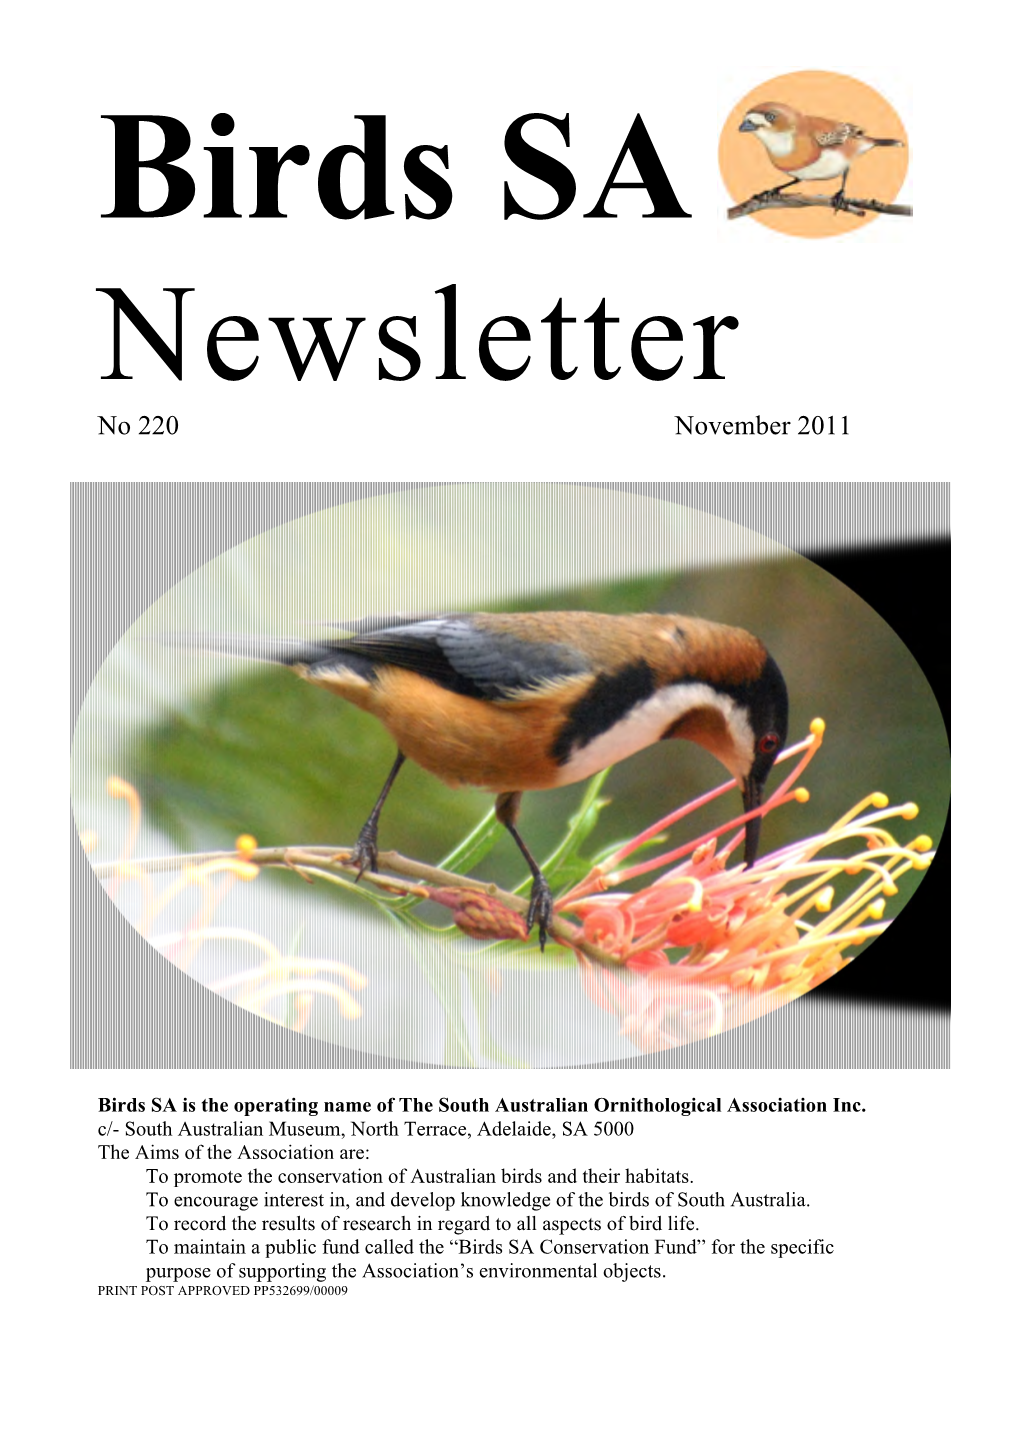 Birds SA Newsletter No. 220, November 2011